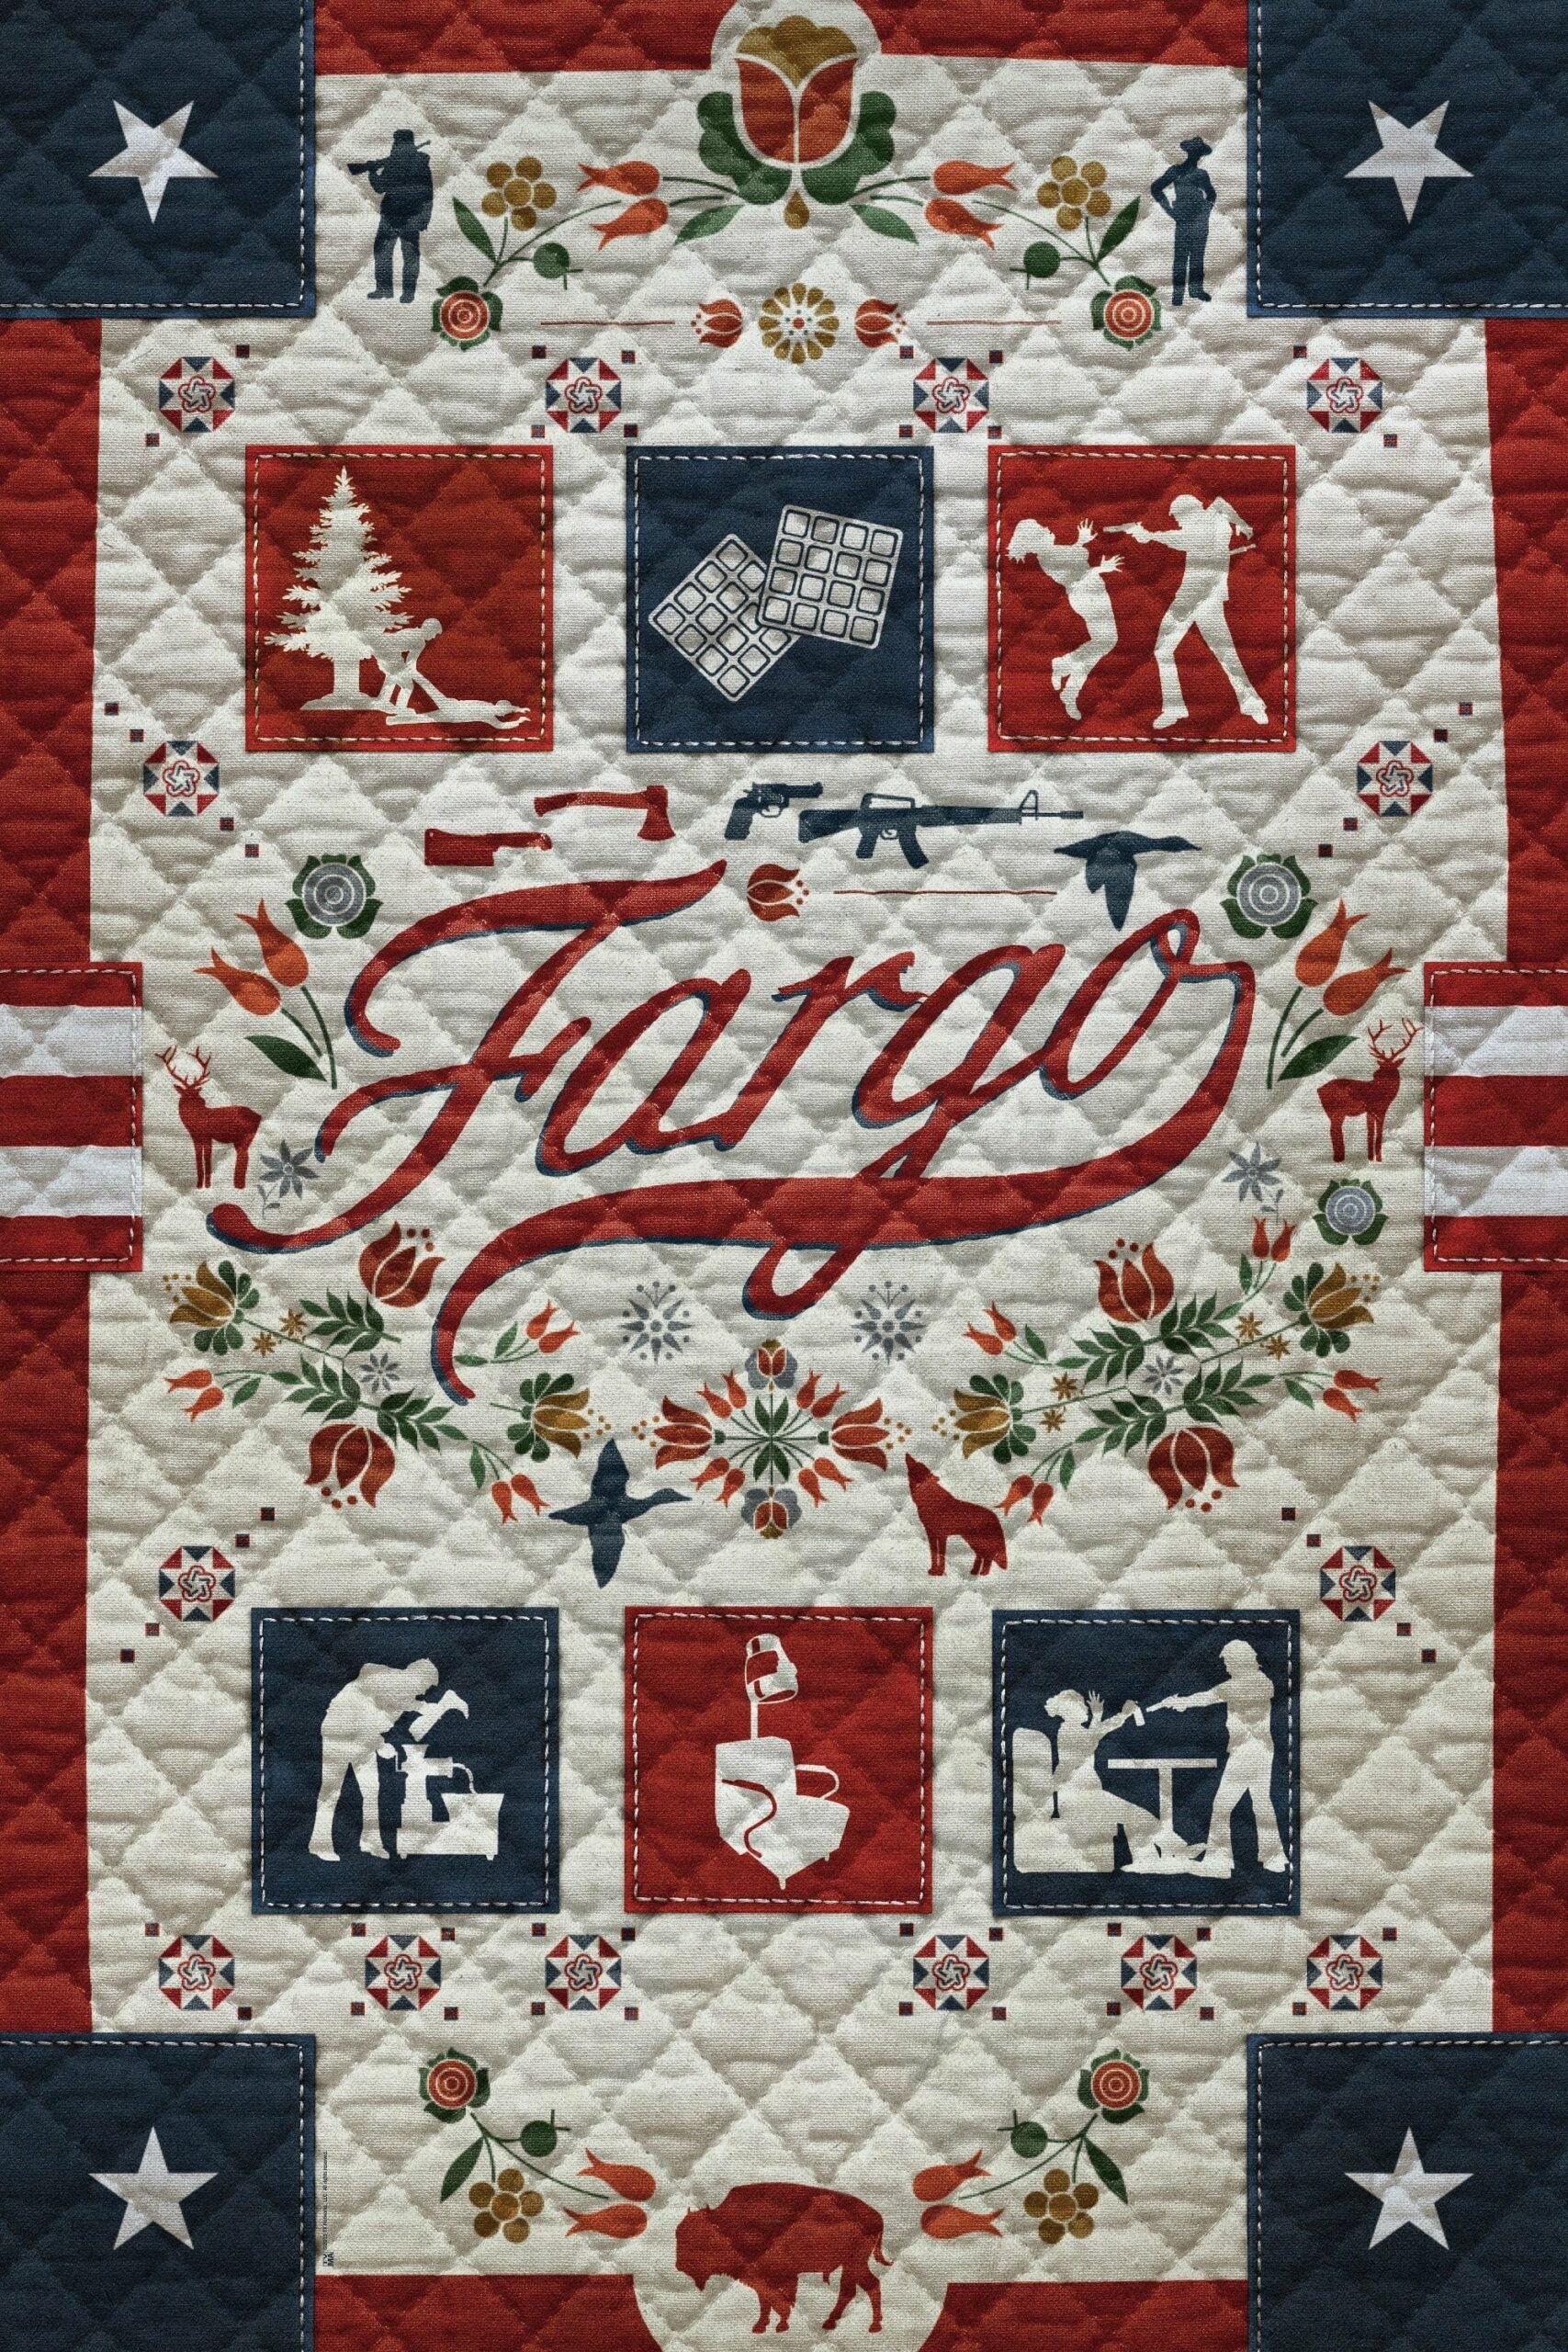 Plakát pro film “Fargo”